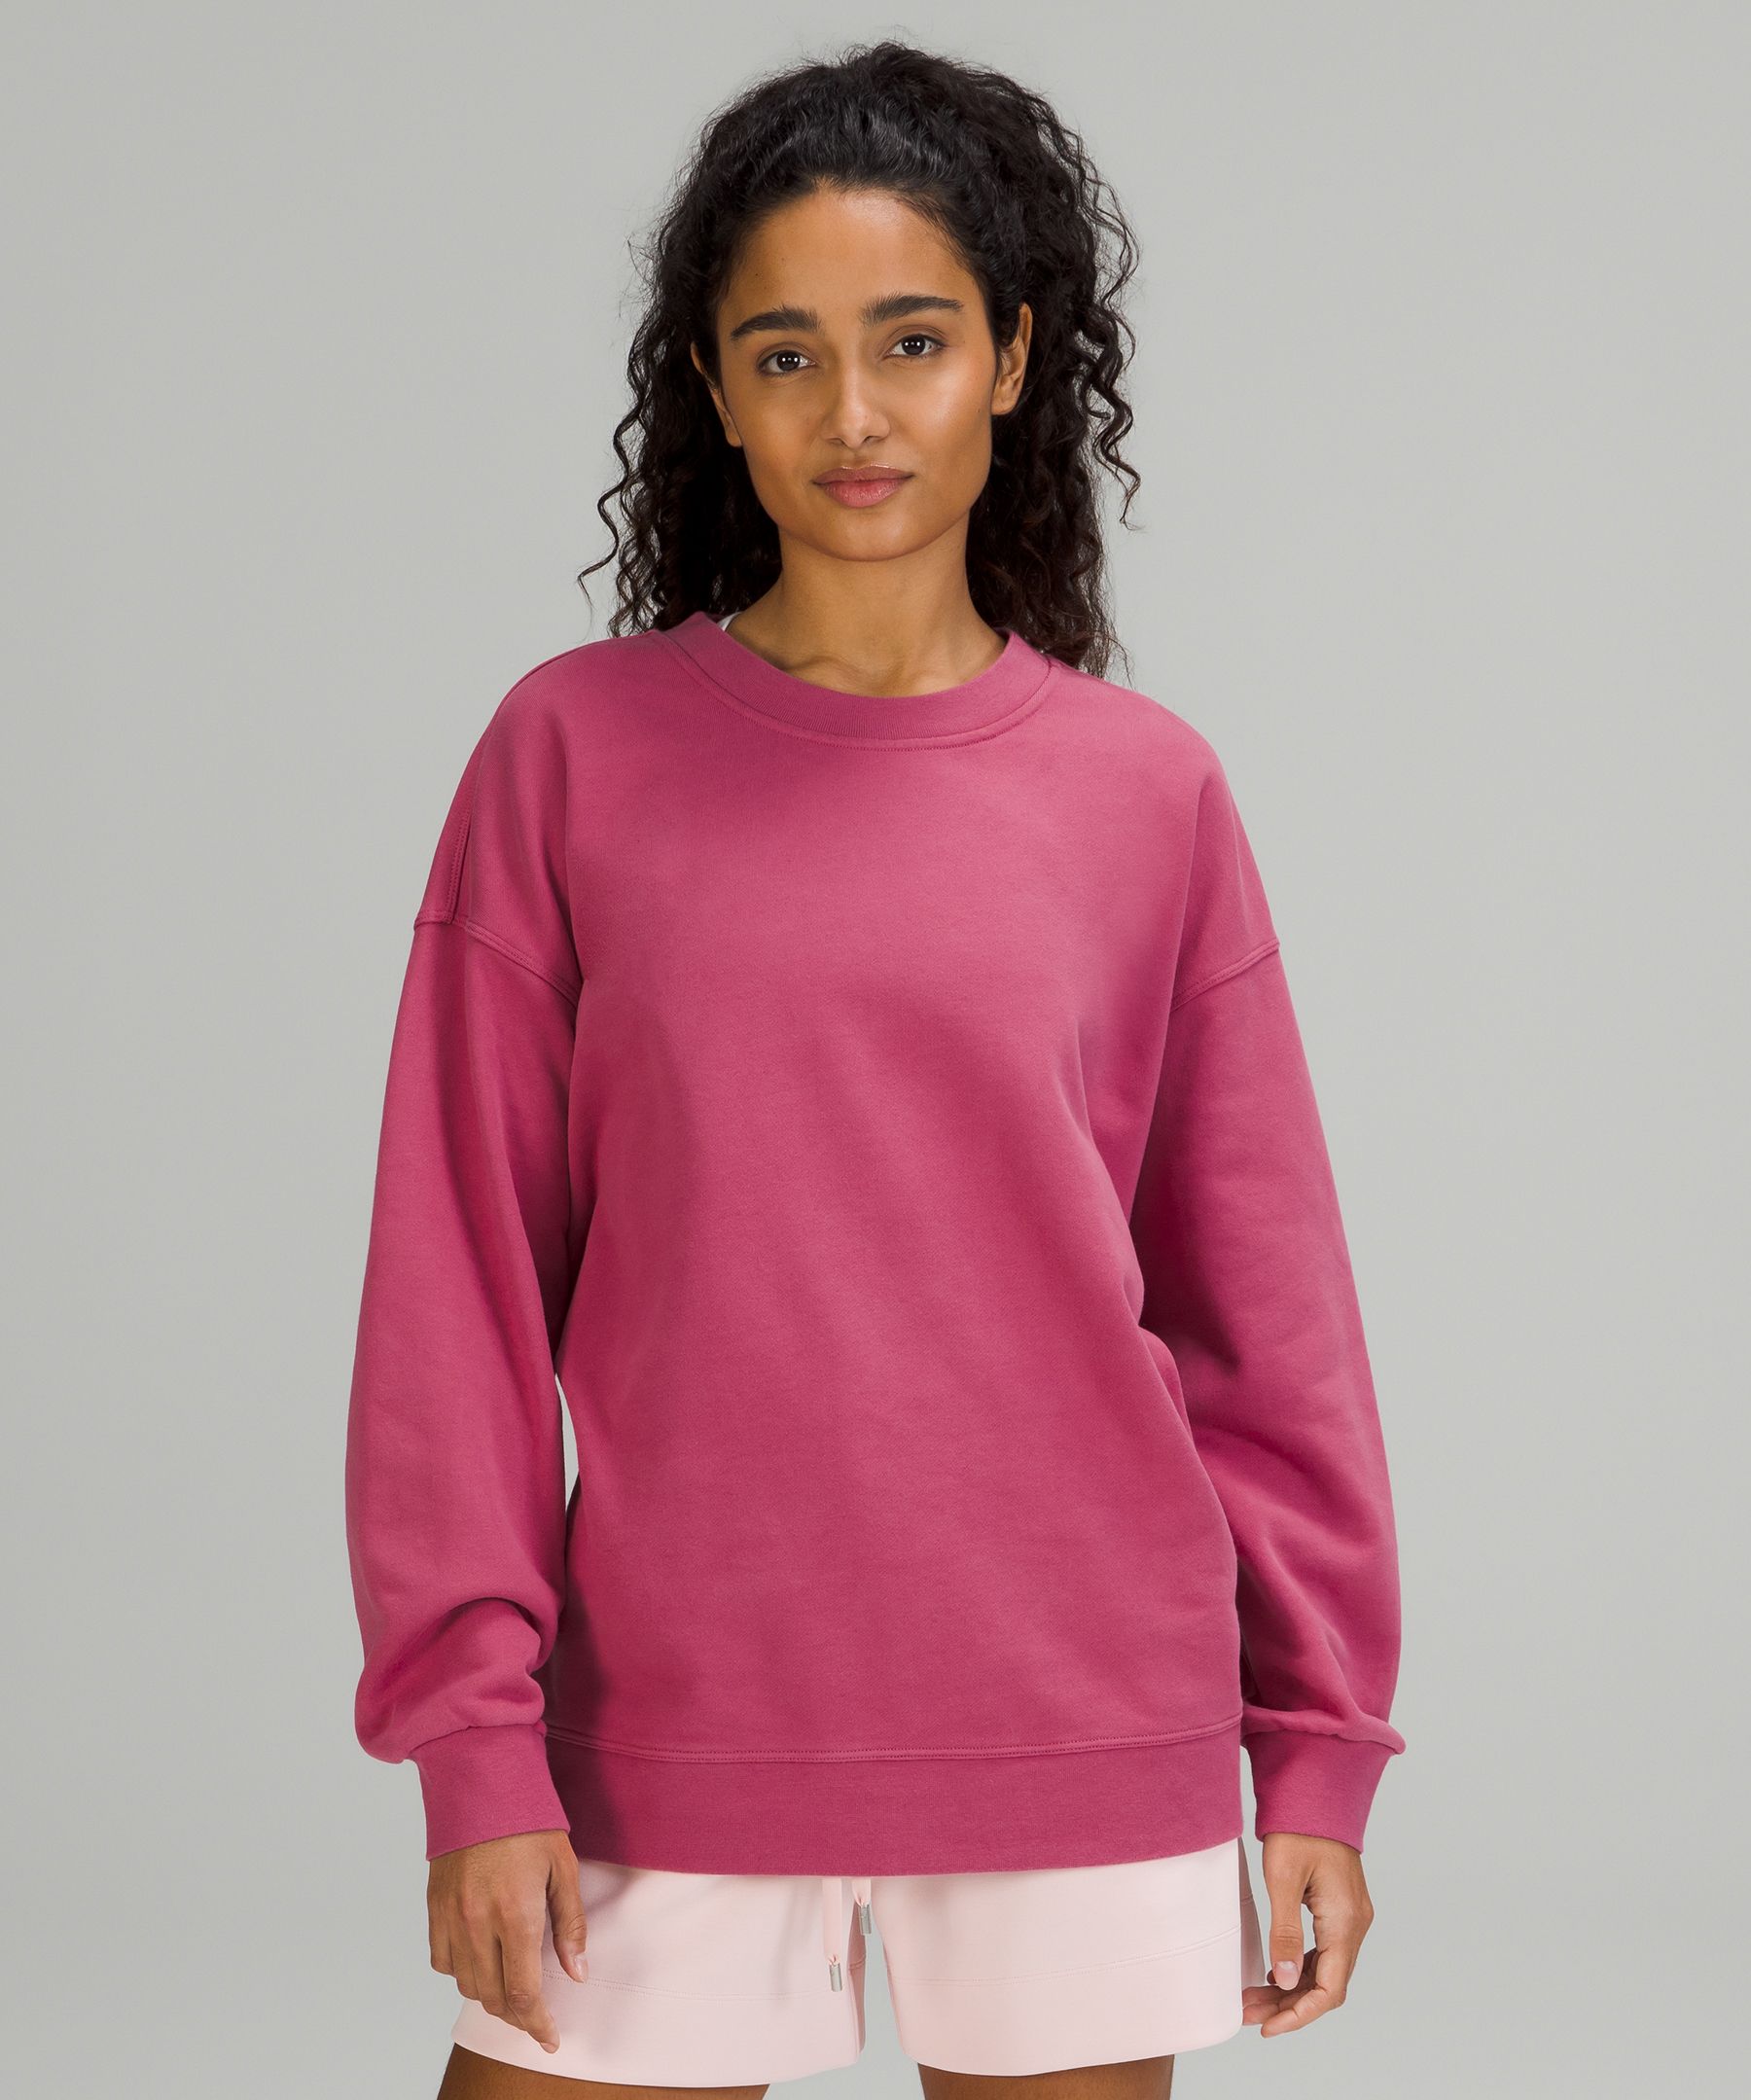 Lululemon Perfectly Oversized Crew Sweatshirt in Guava Pink size 10